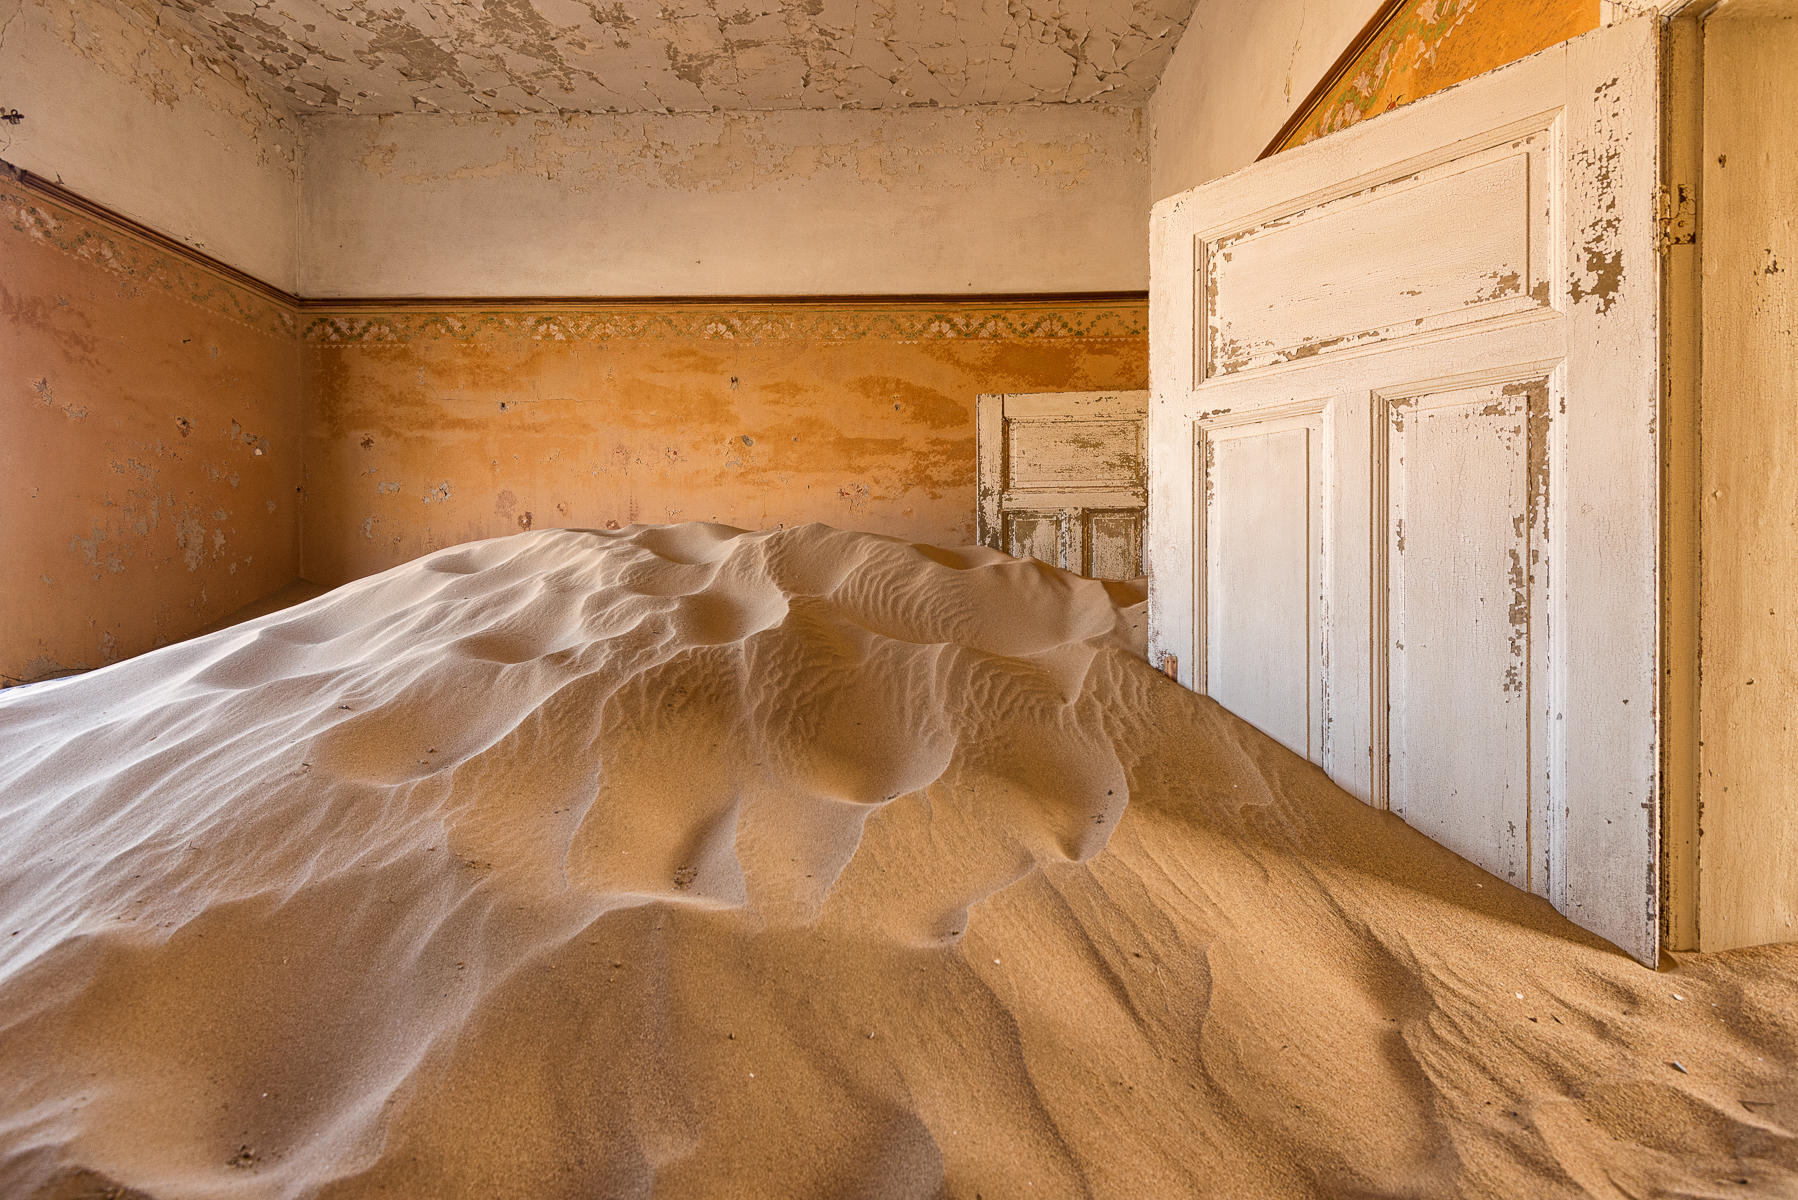 Living Room : Namibia, The Land of Dunes : ELIZABETH SANJUAN PHOTOGRAPHY